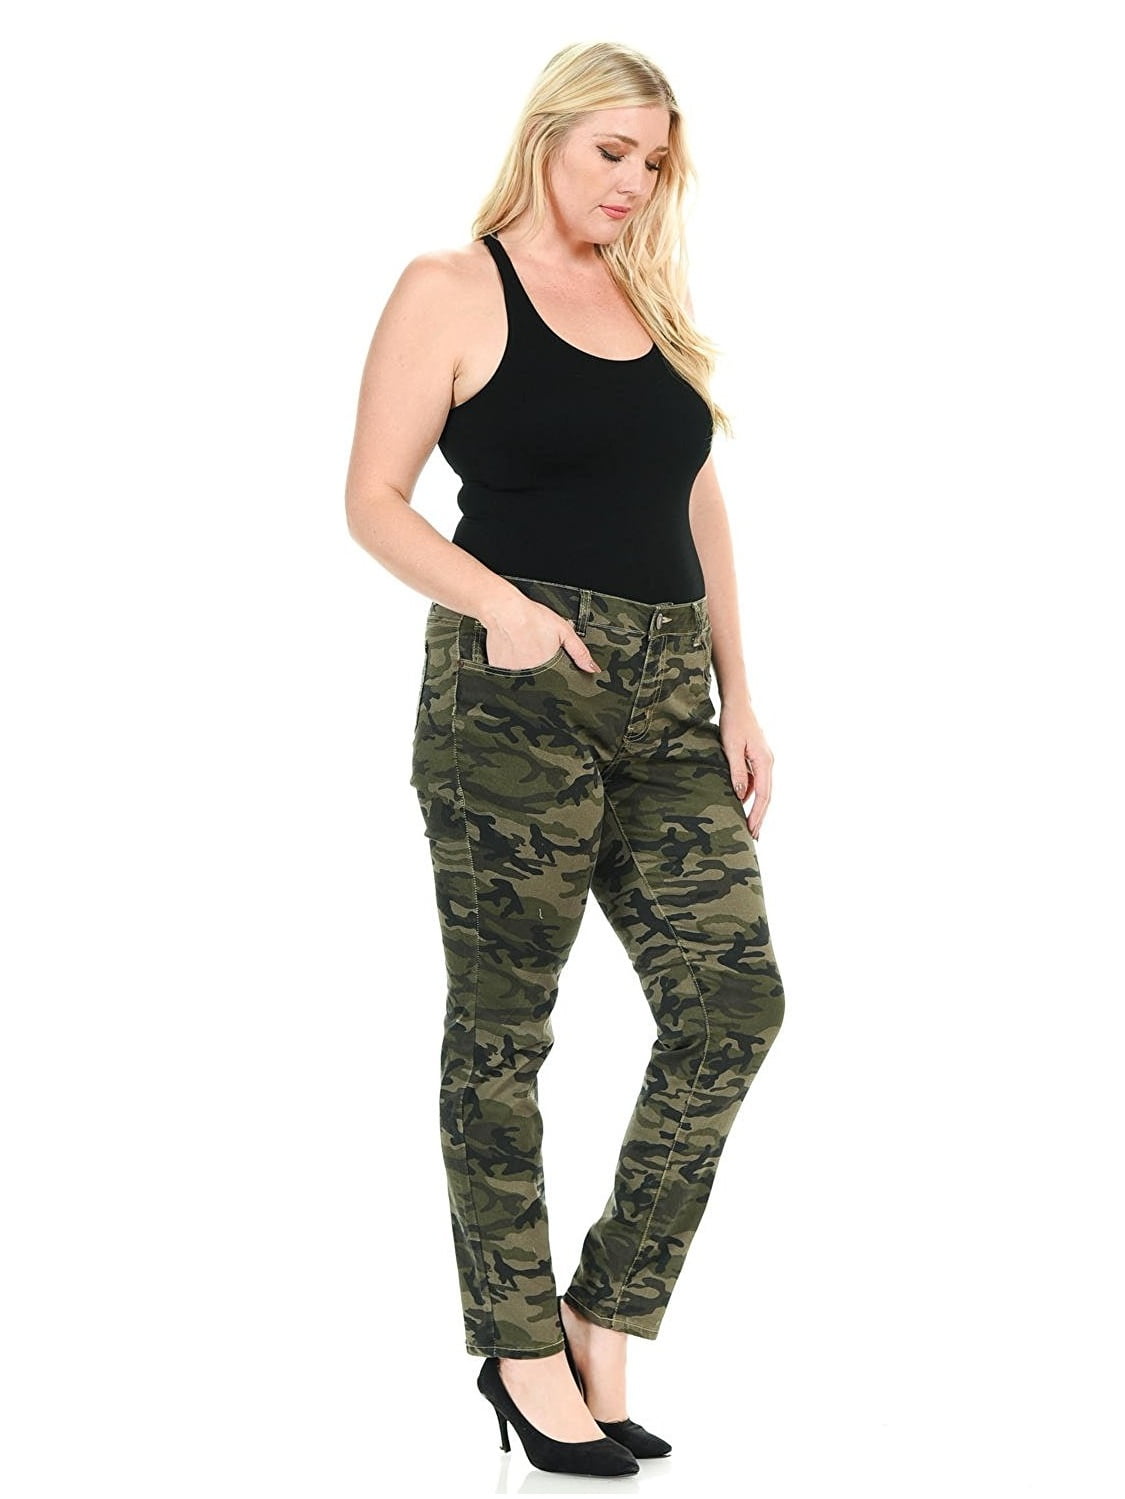 Sweet Look Womens Plus Size Stretch Jeans Army Style Camo Camouflage Skinny Denim Pants